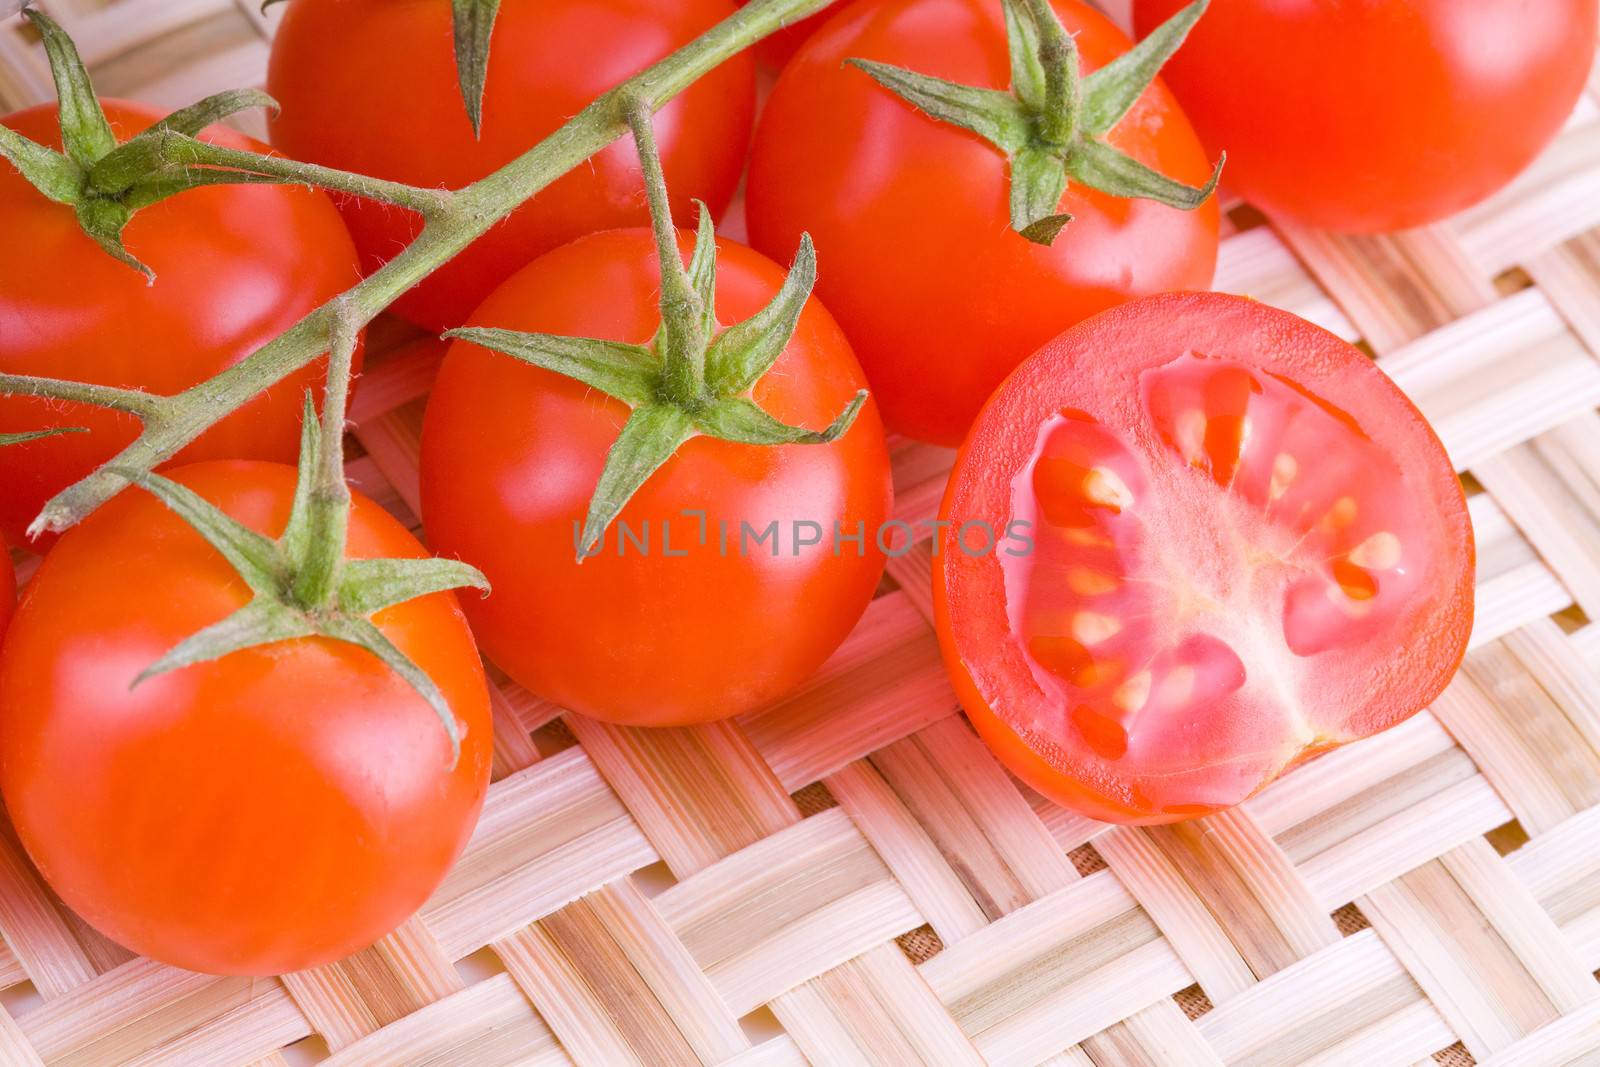 Bunch of tomatoes by Gbuglok